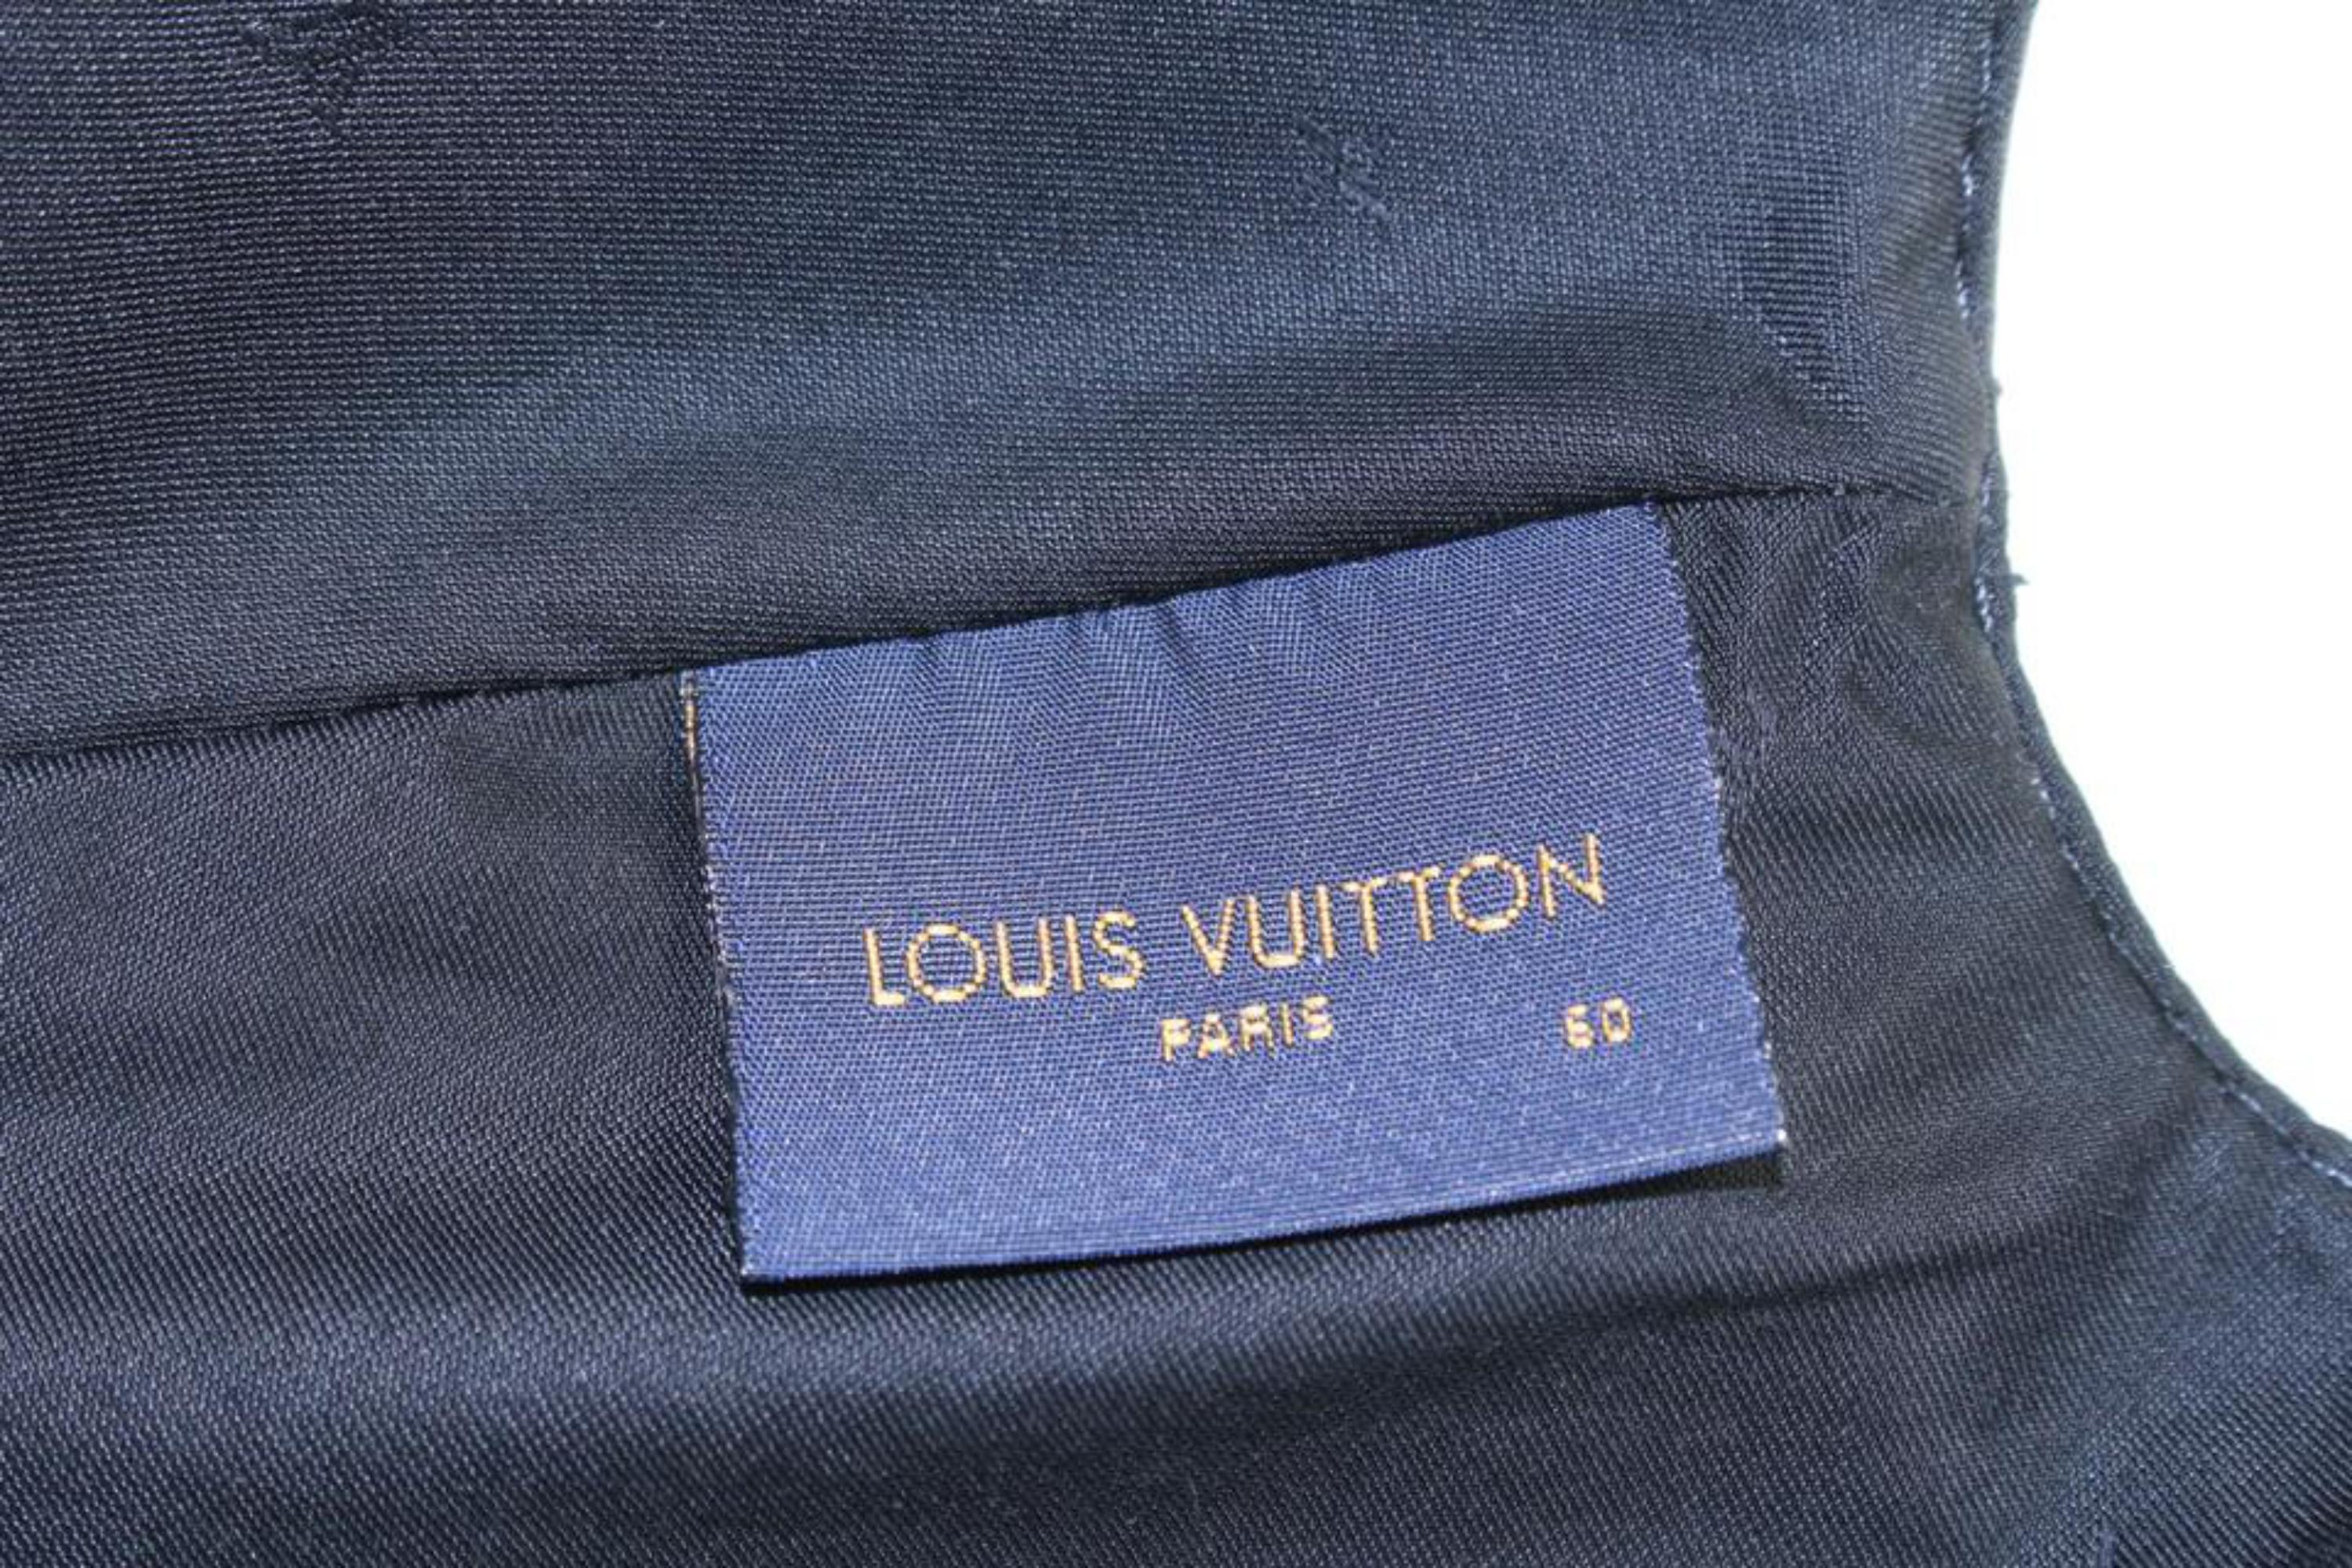 Louis Vuitton Black Leather Monogram Shadow Baseball Cap Hat 1231lv10 4